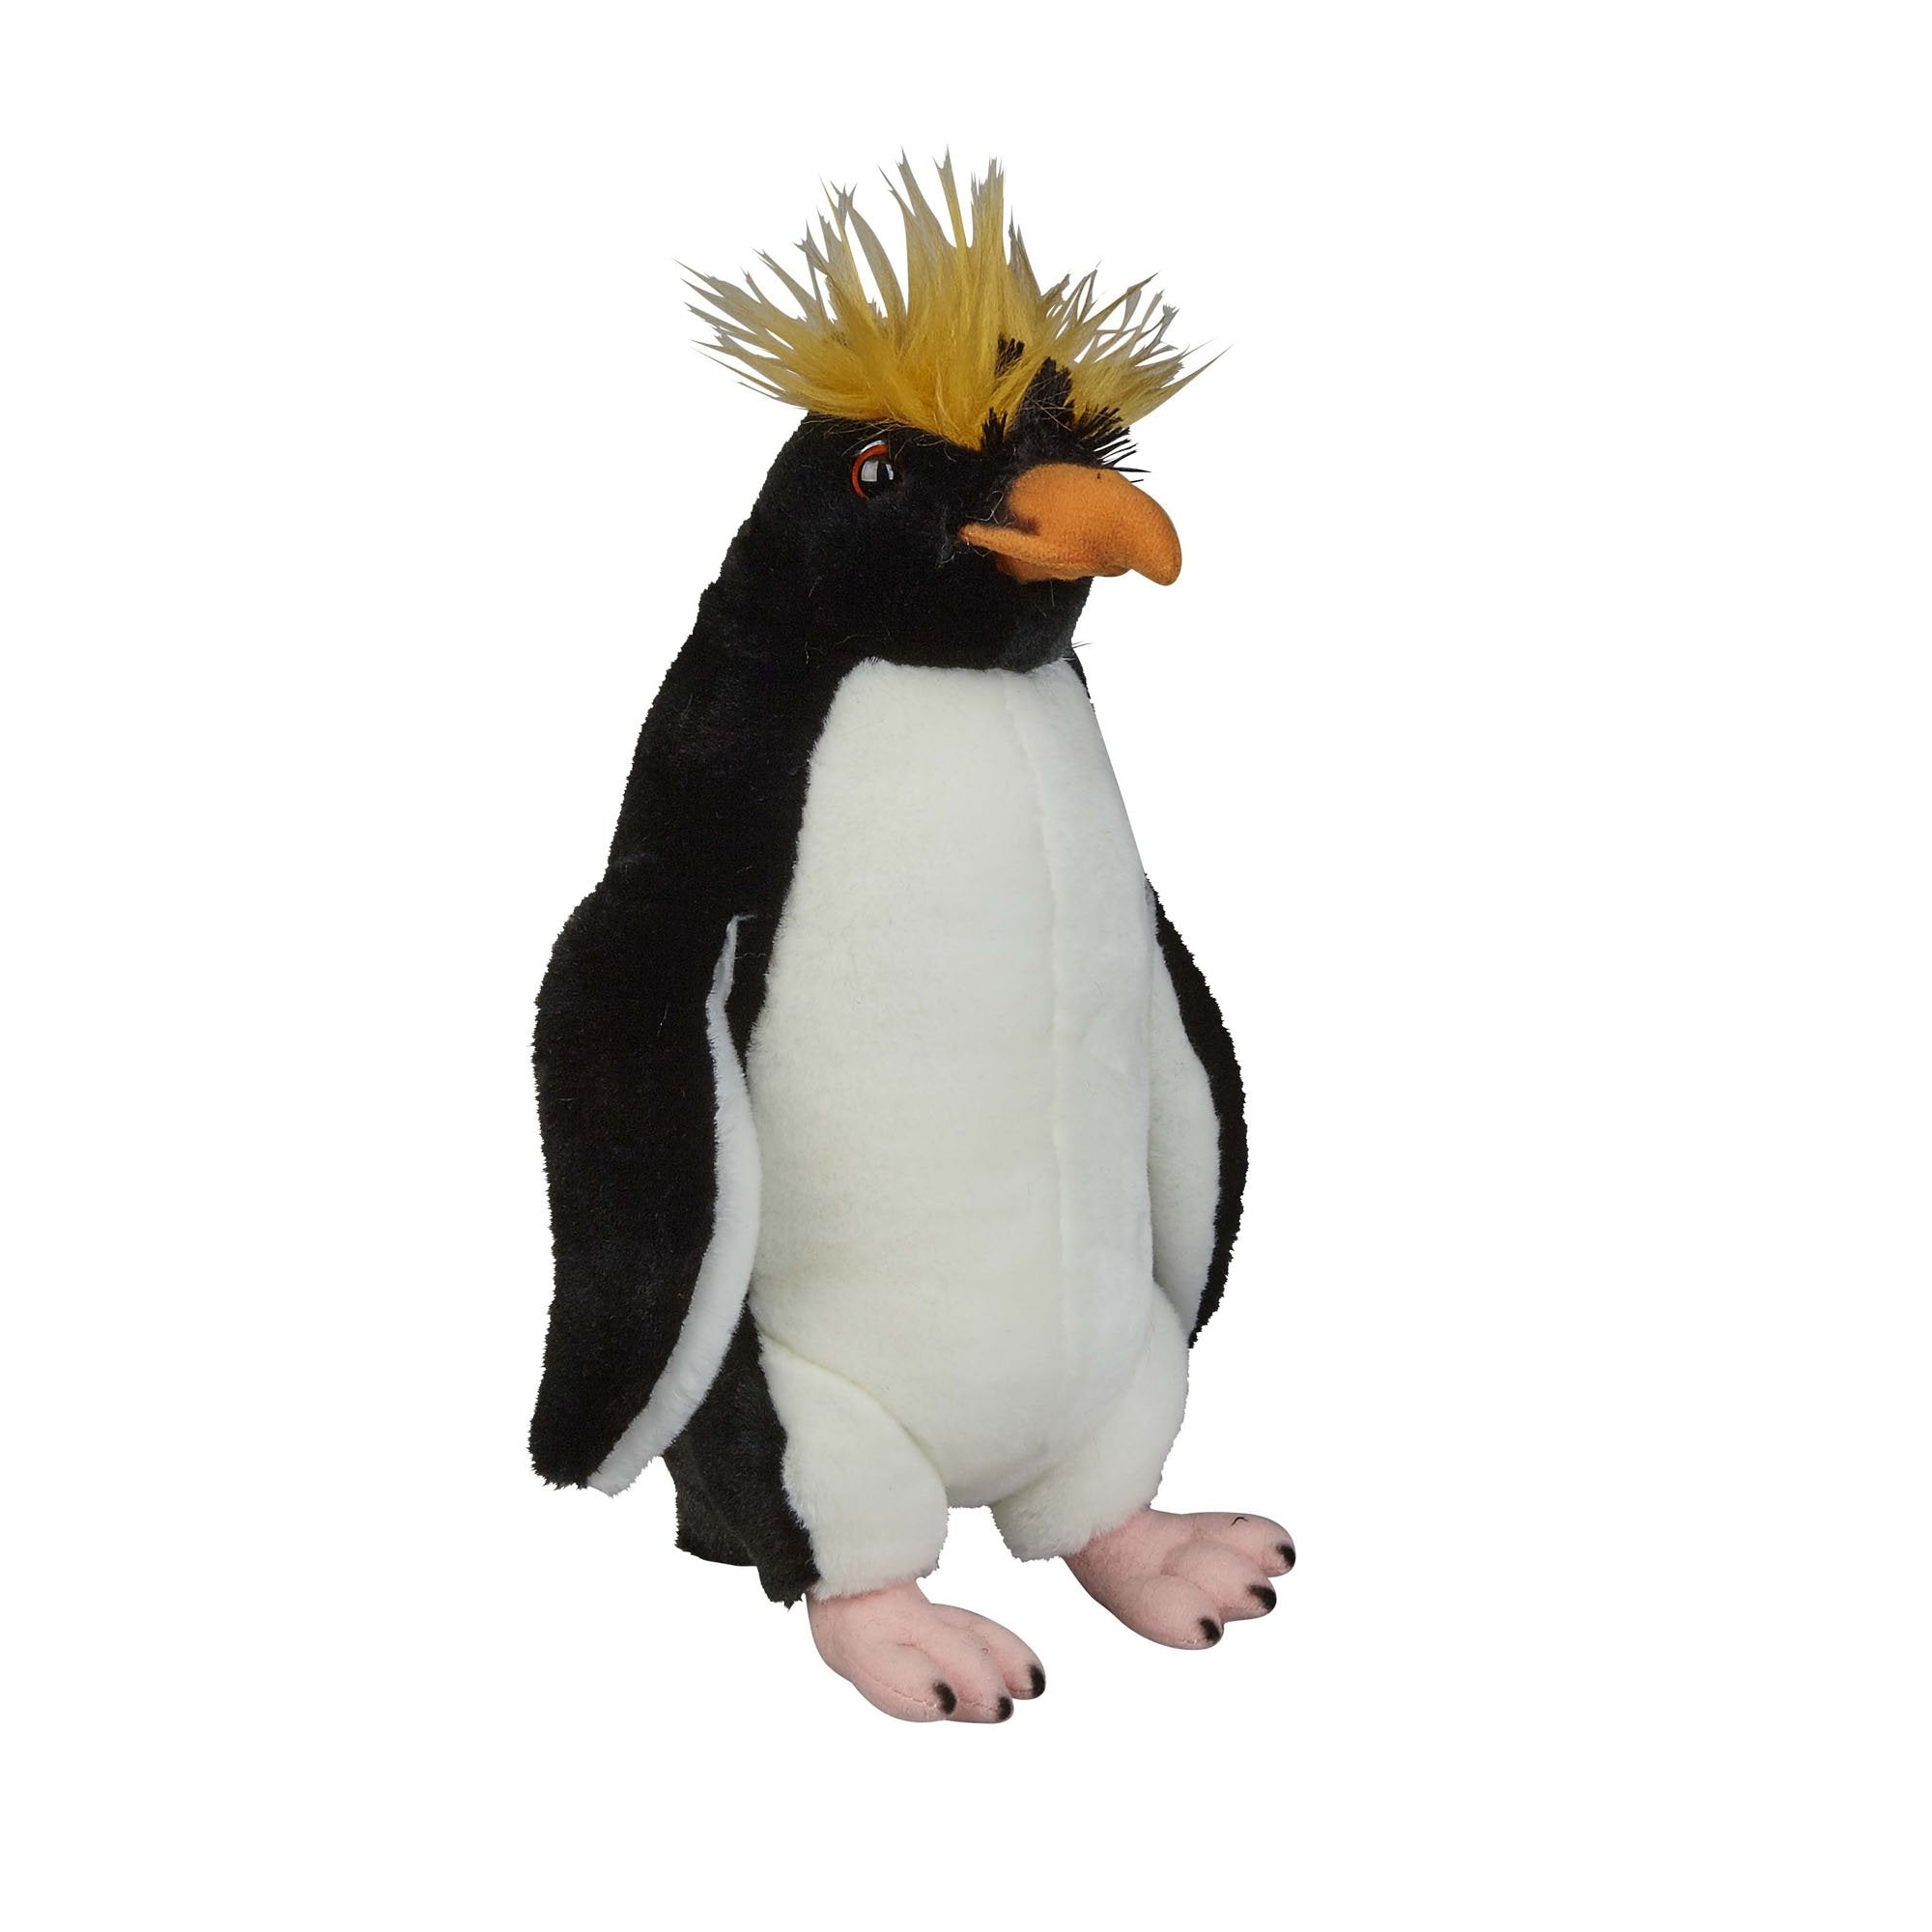 Rockhopper penguin soft toy, 32cm